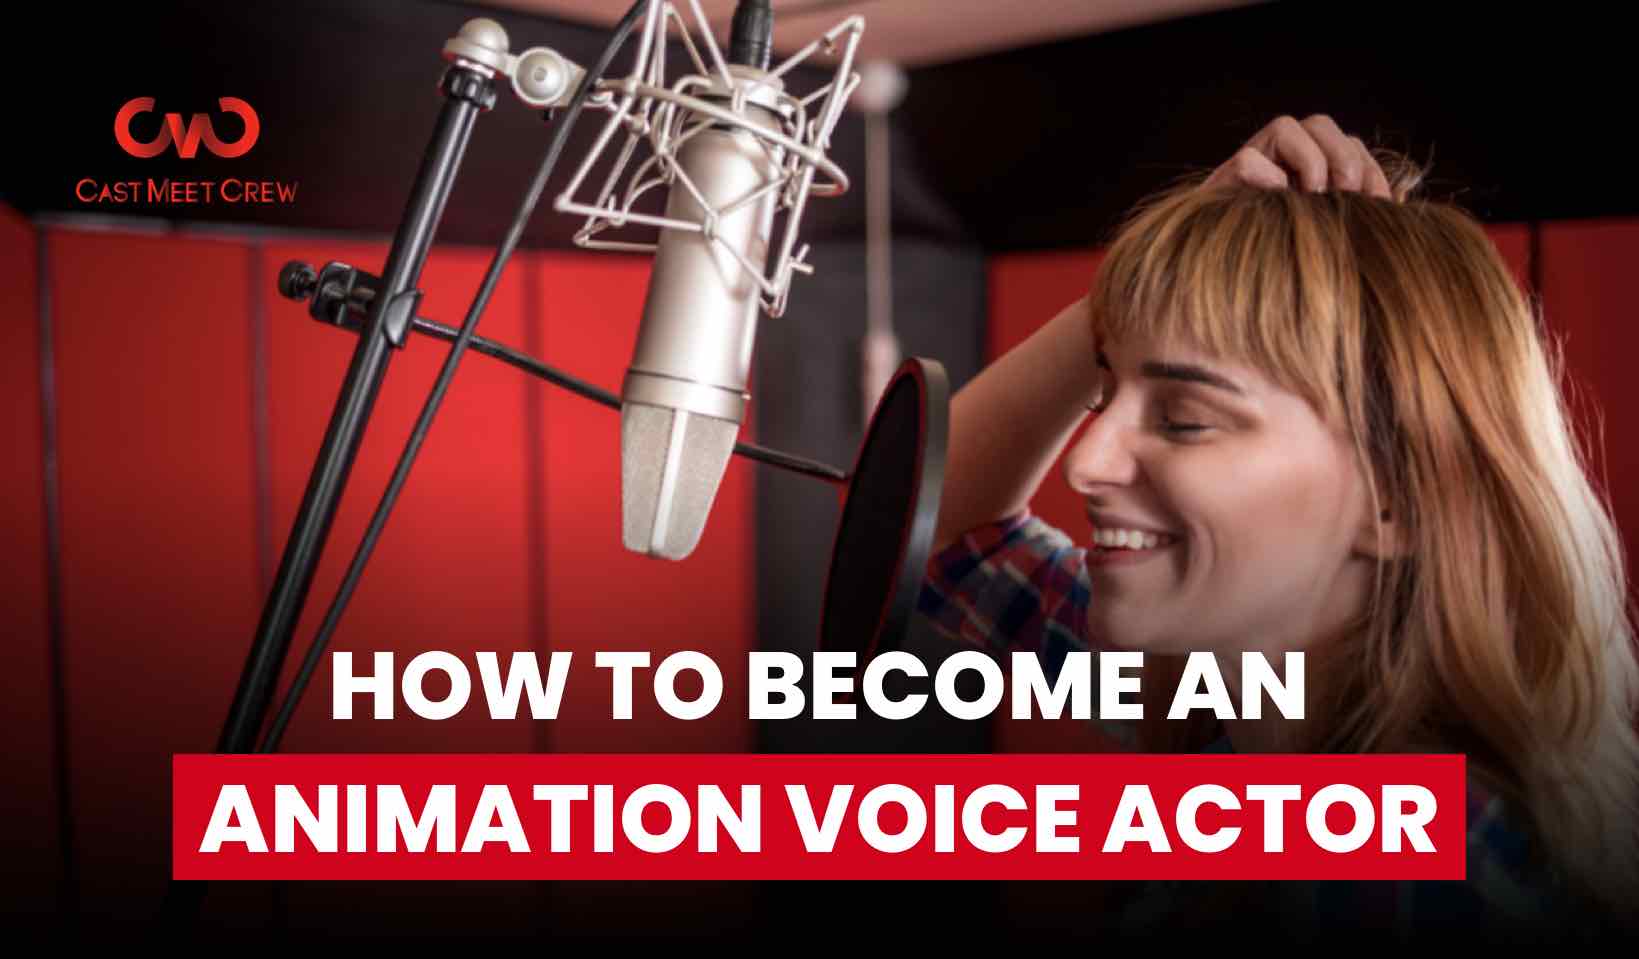 Animation Voice Actor